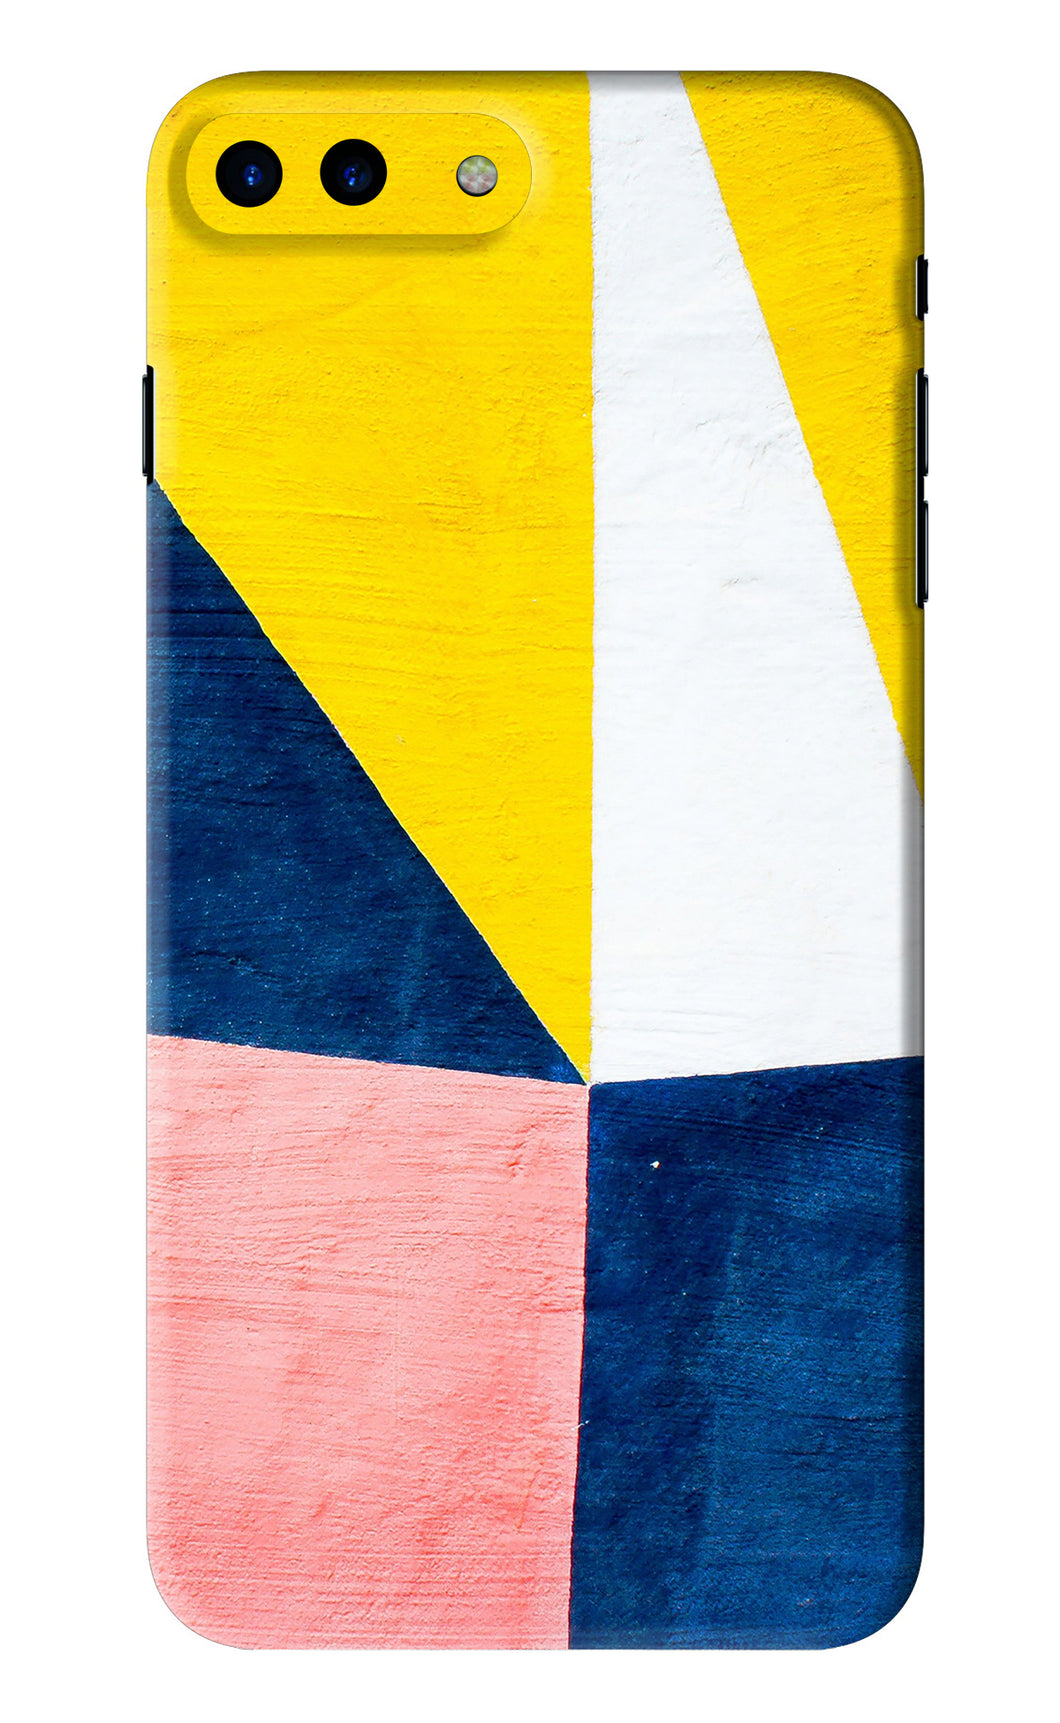 Colourful Art iPhone 7 Plus Back Skin Wrap